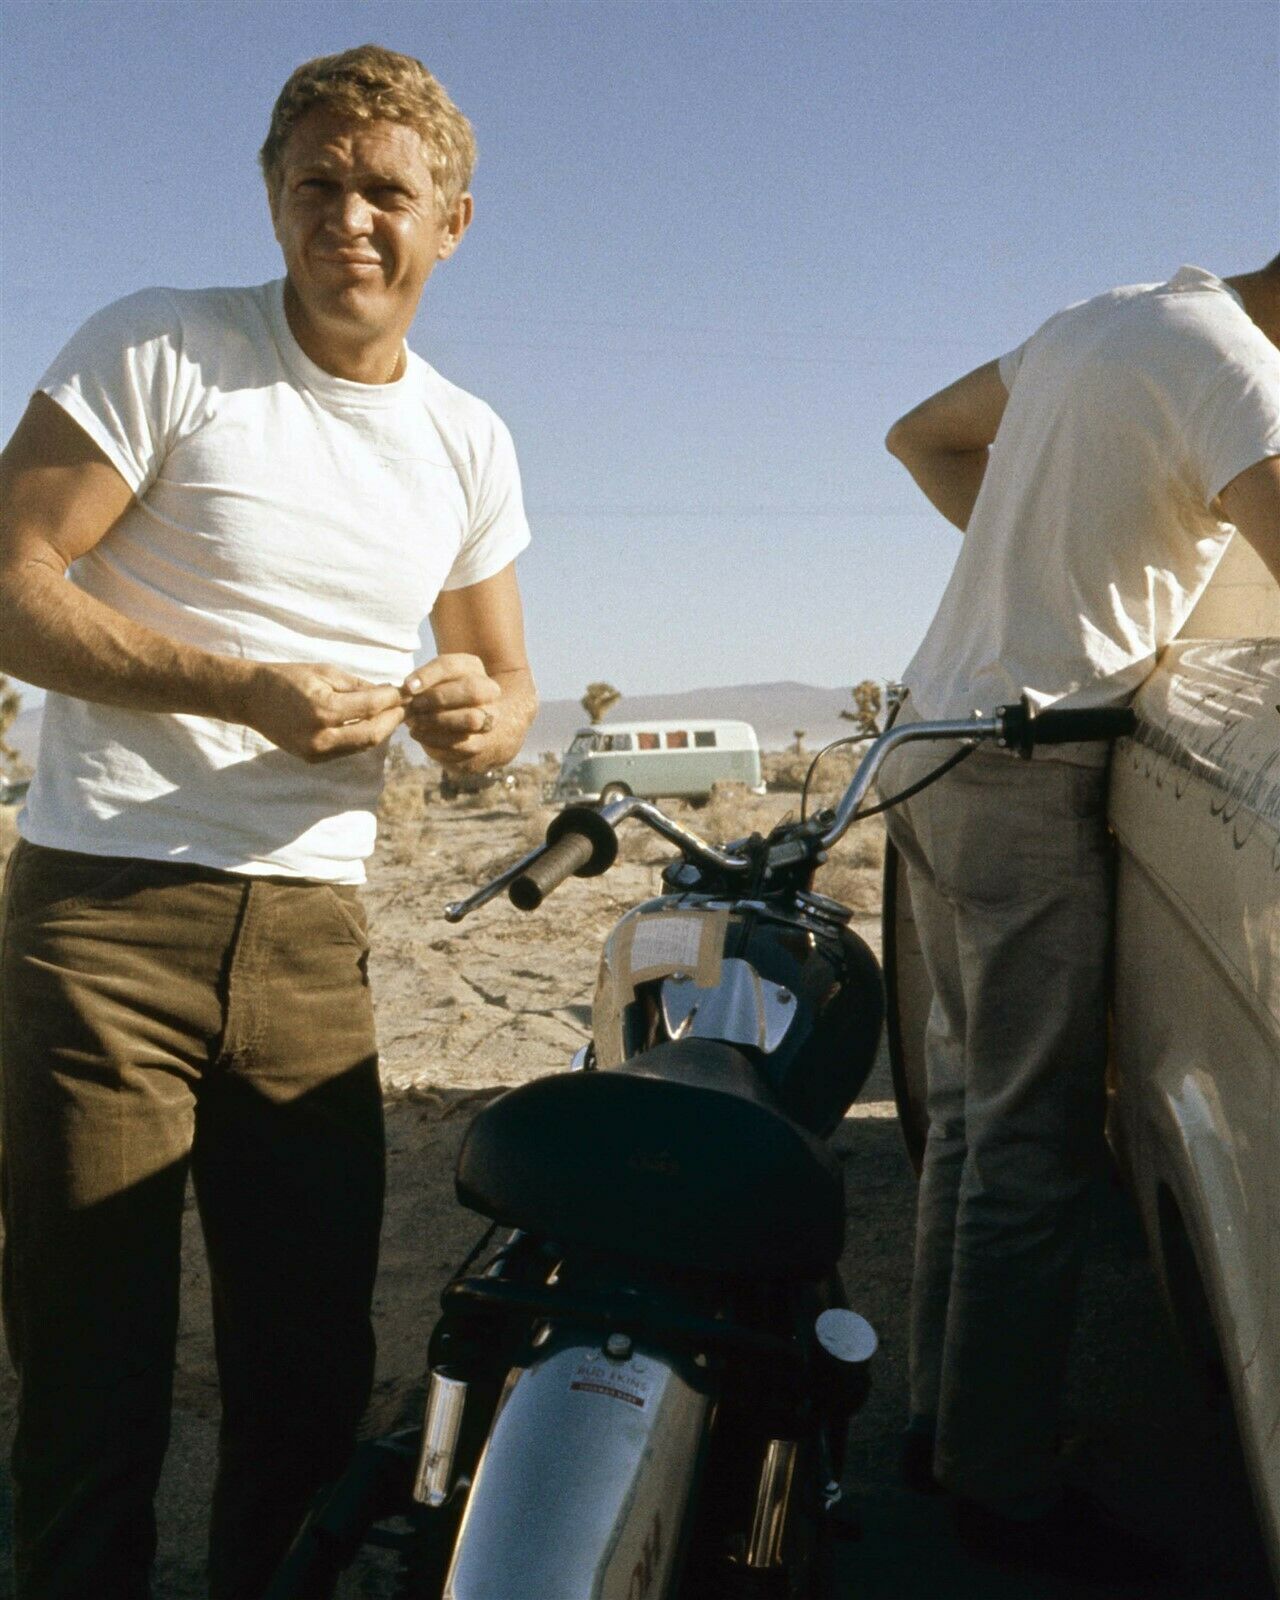 Steve McQueen in white t-shirt stands next to bike in desert 1960's 5x7 photo